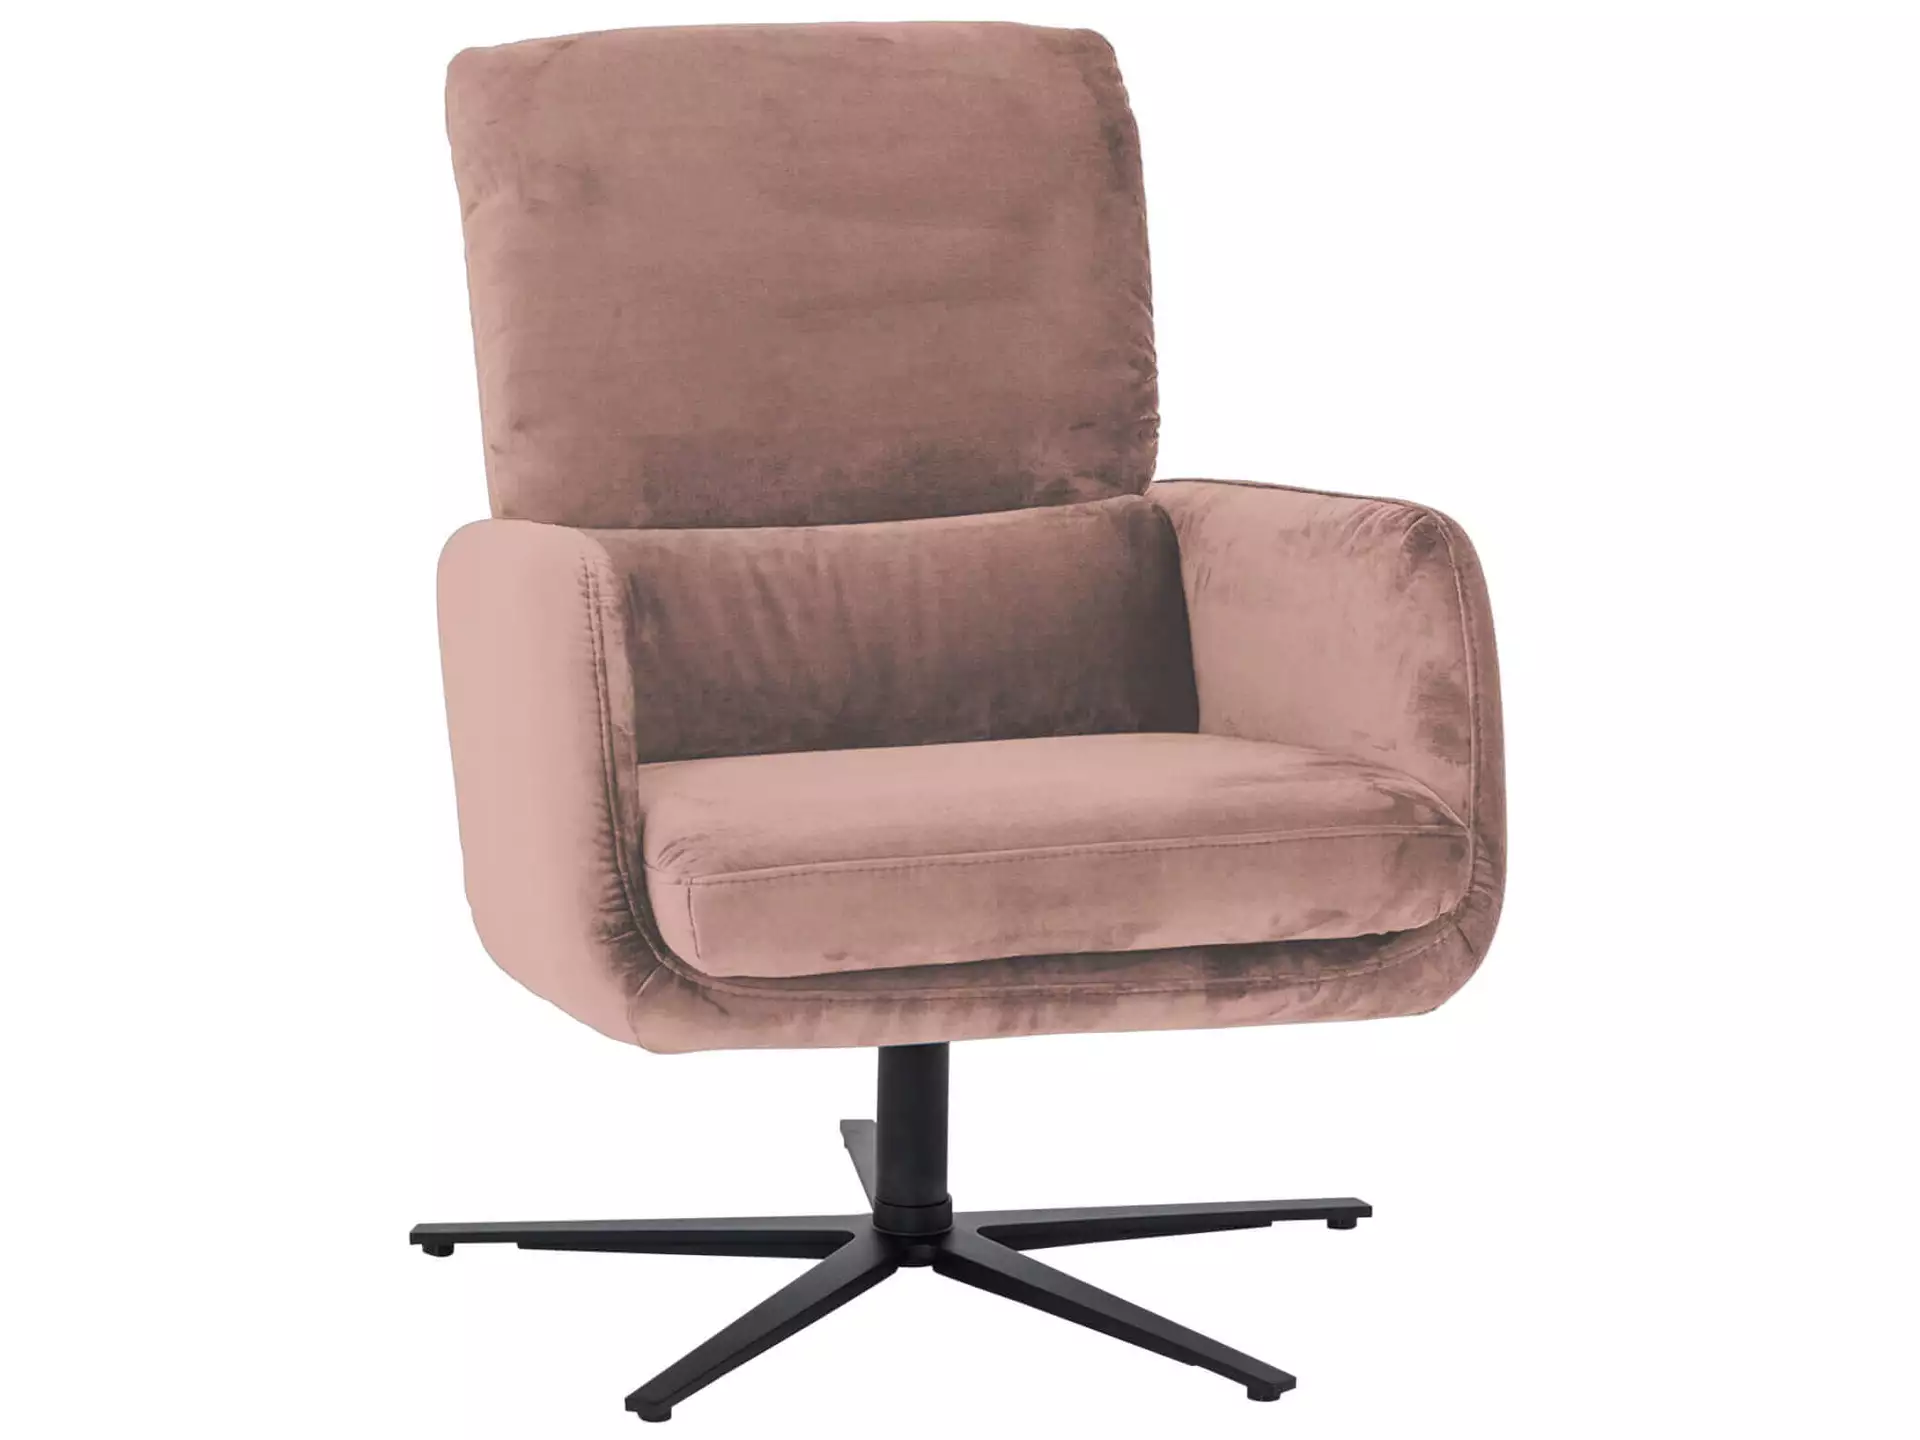 Sessel 8155 Basic Himolla / Farbe: Puder / Material: Stoff Basic